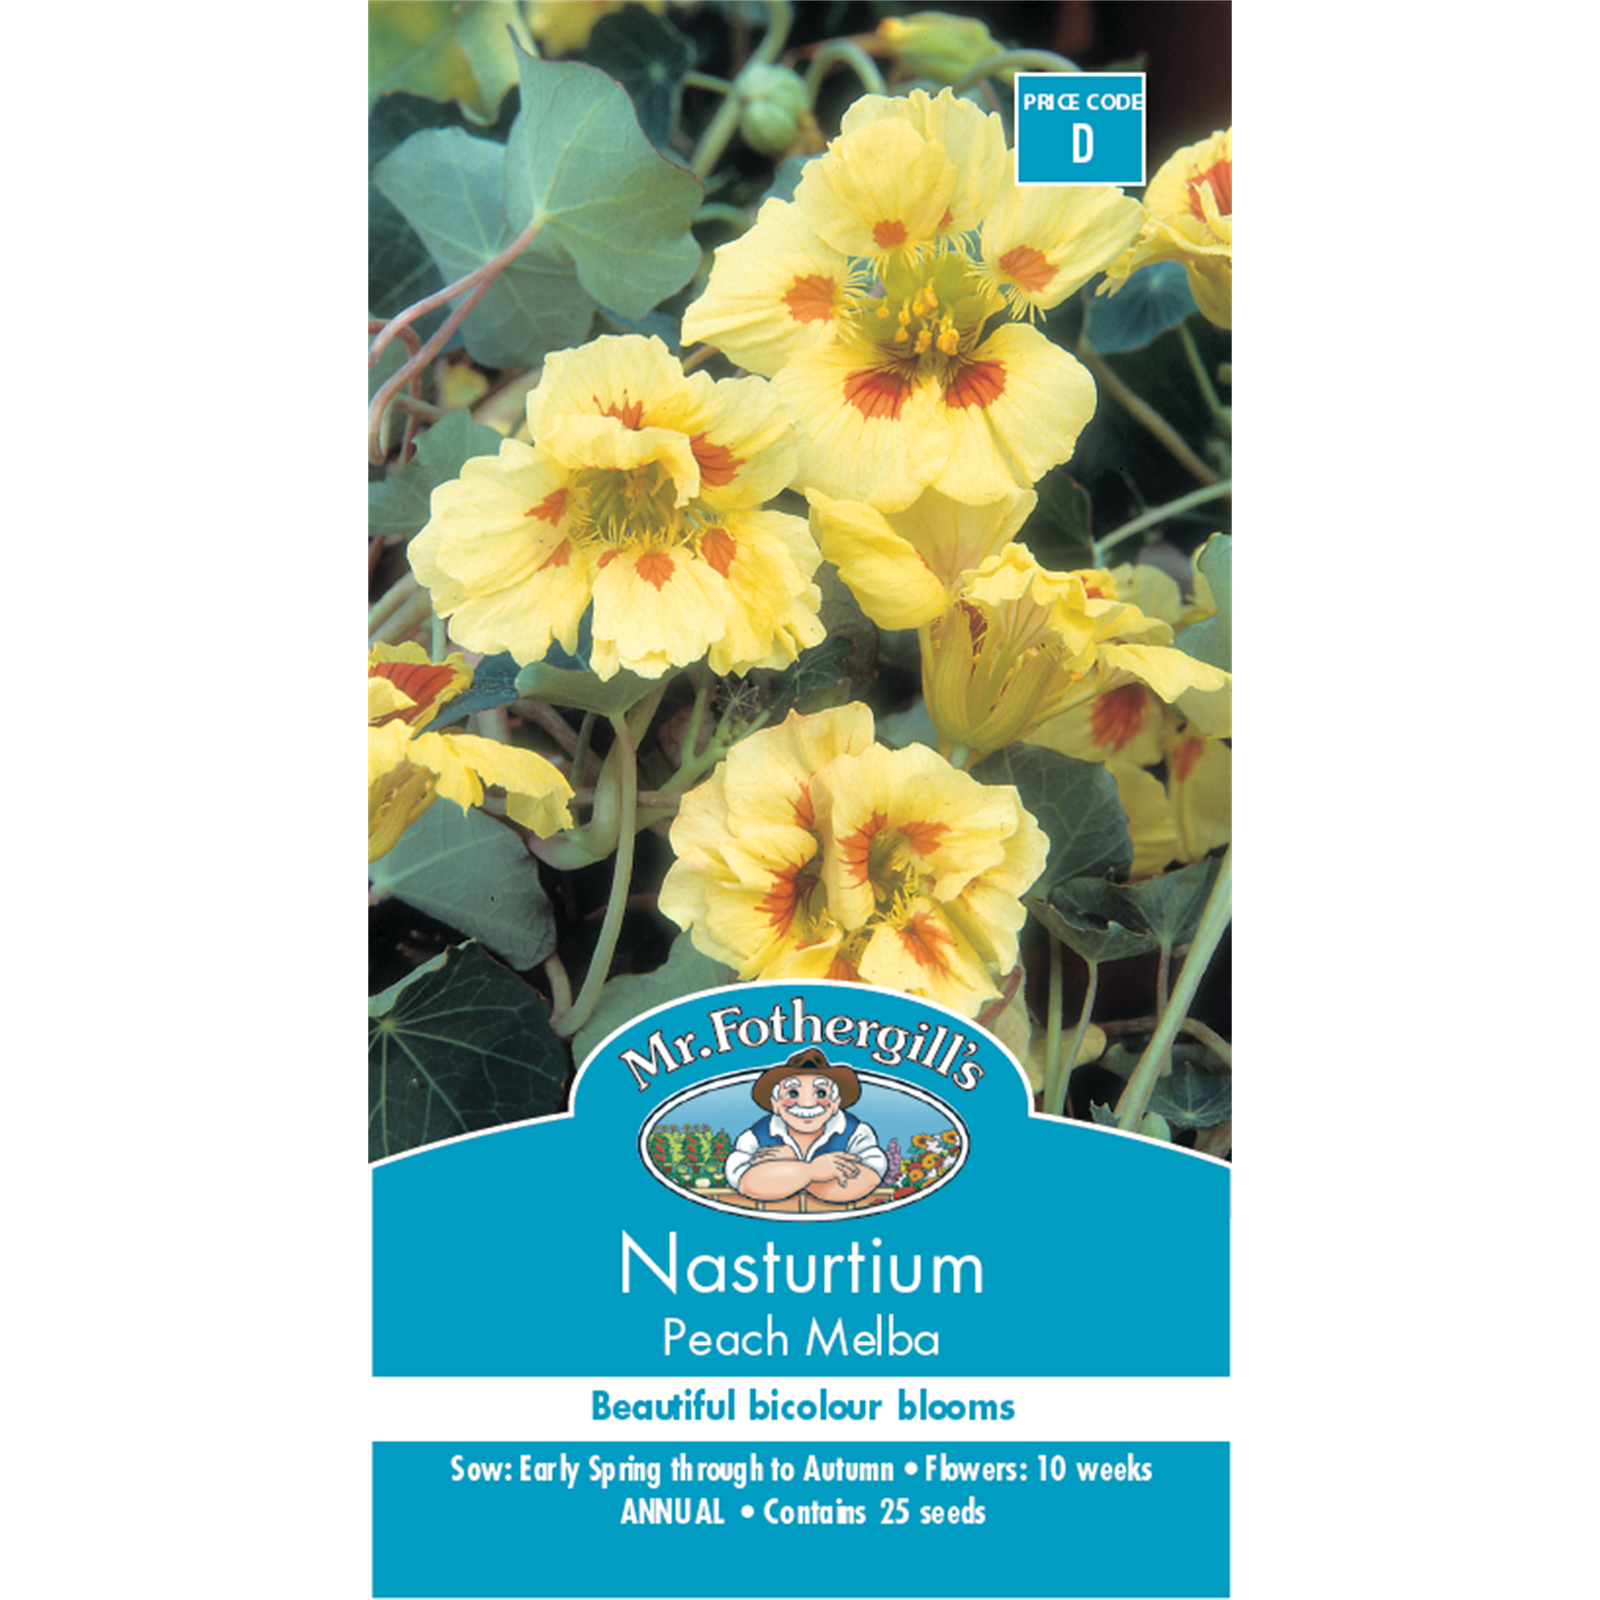 Mr Fothergill's Nasturtium Peach Melba Flower Seeds